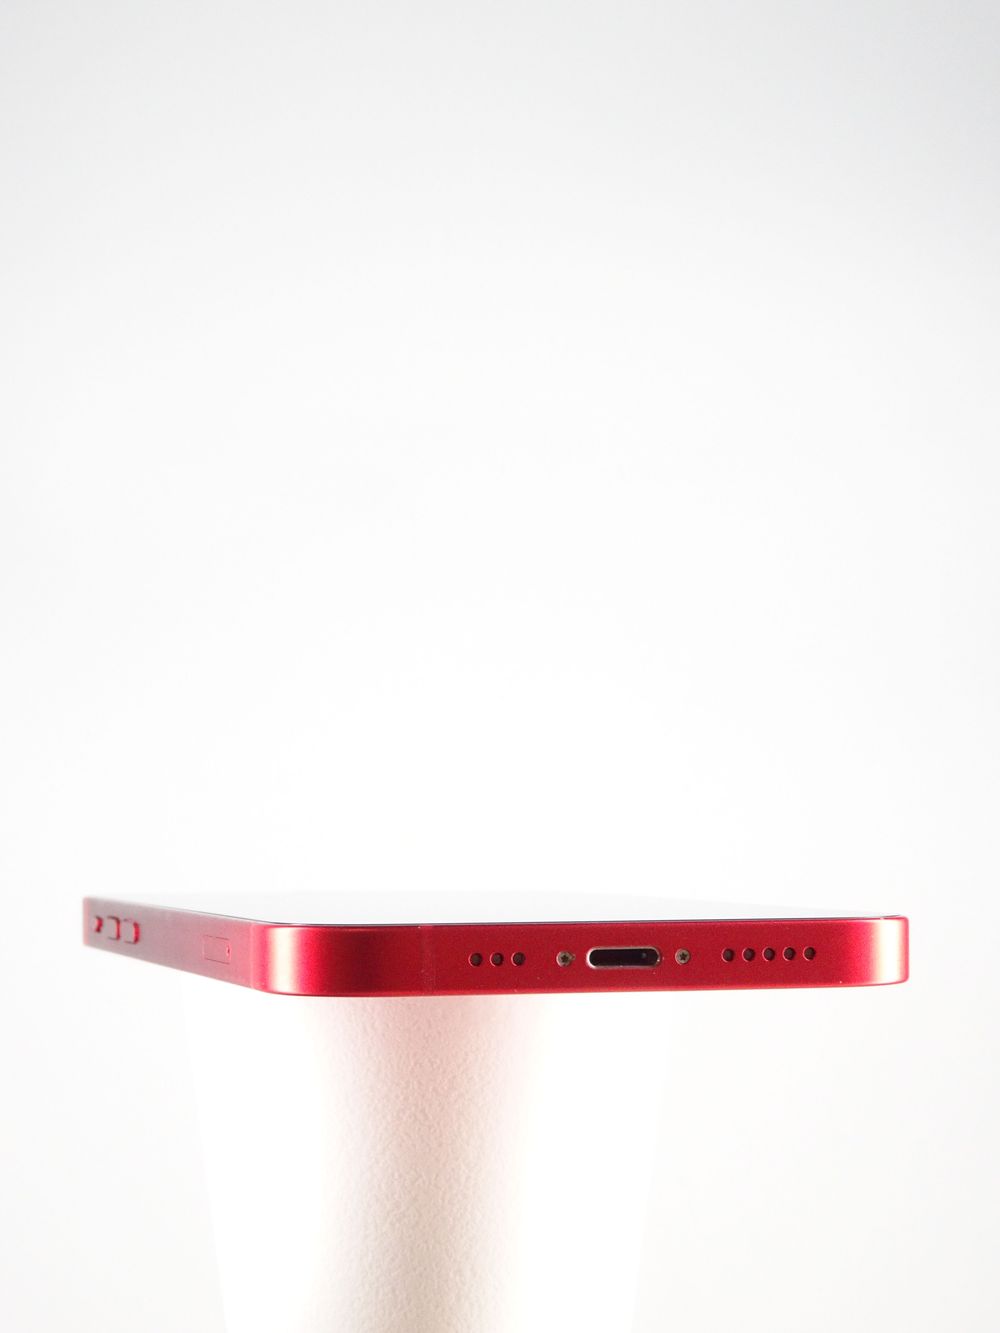 Мобилен телефон Apple, iPhone 12, 64 GB, Red,  Много добро